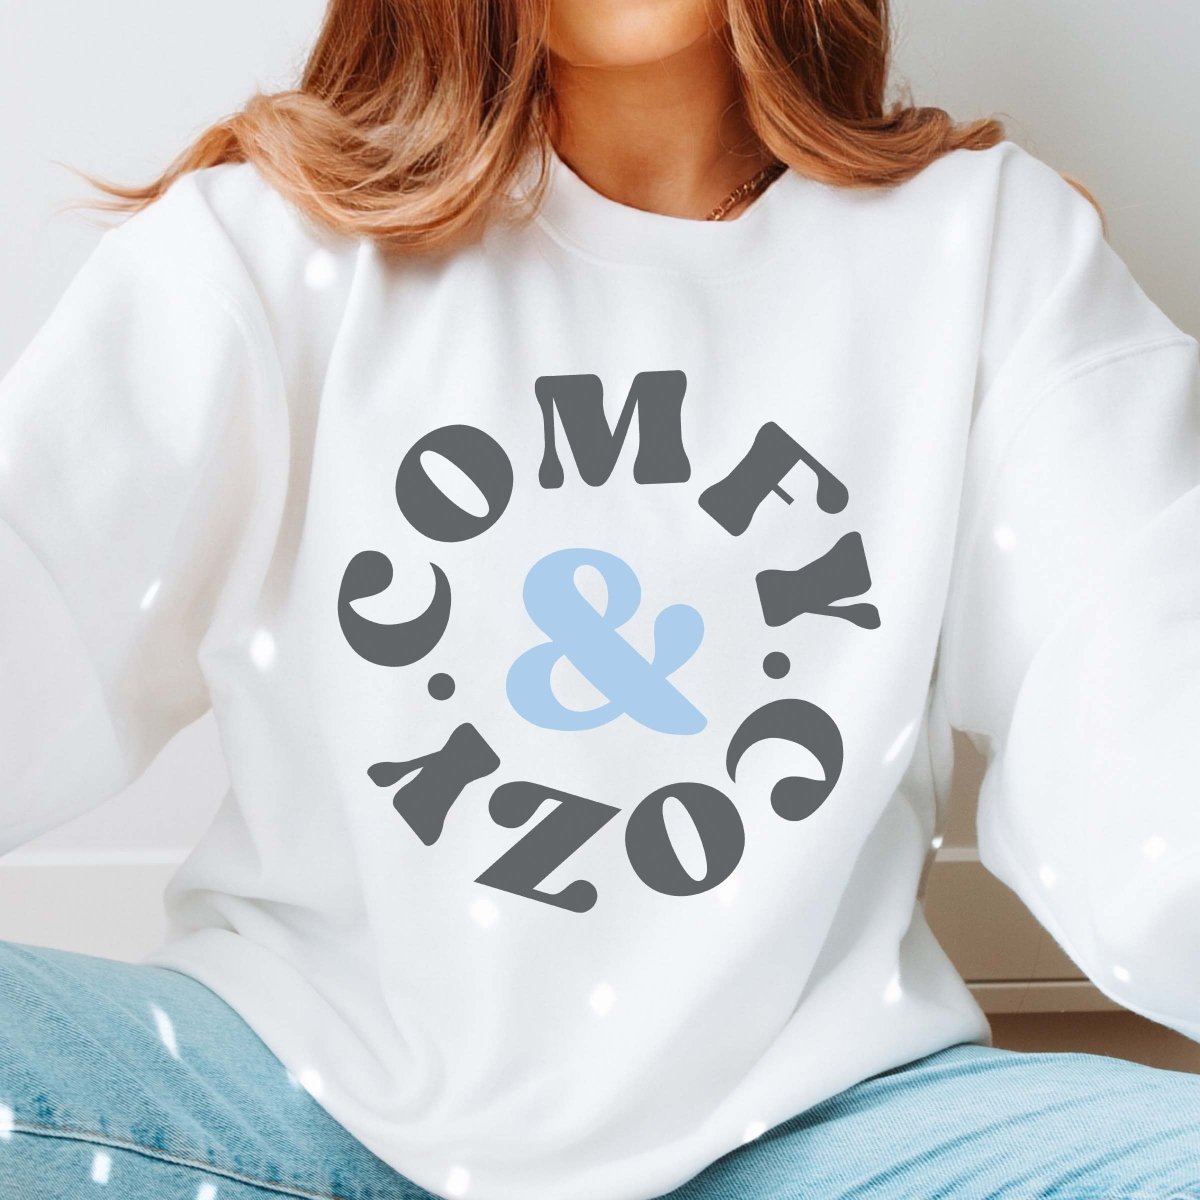 Comfy &amp; Cozy Bella Crew Sweatshirt - Limeberry Designs